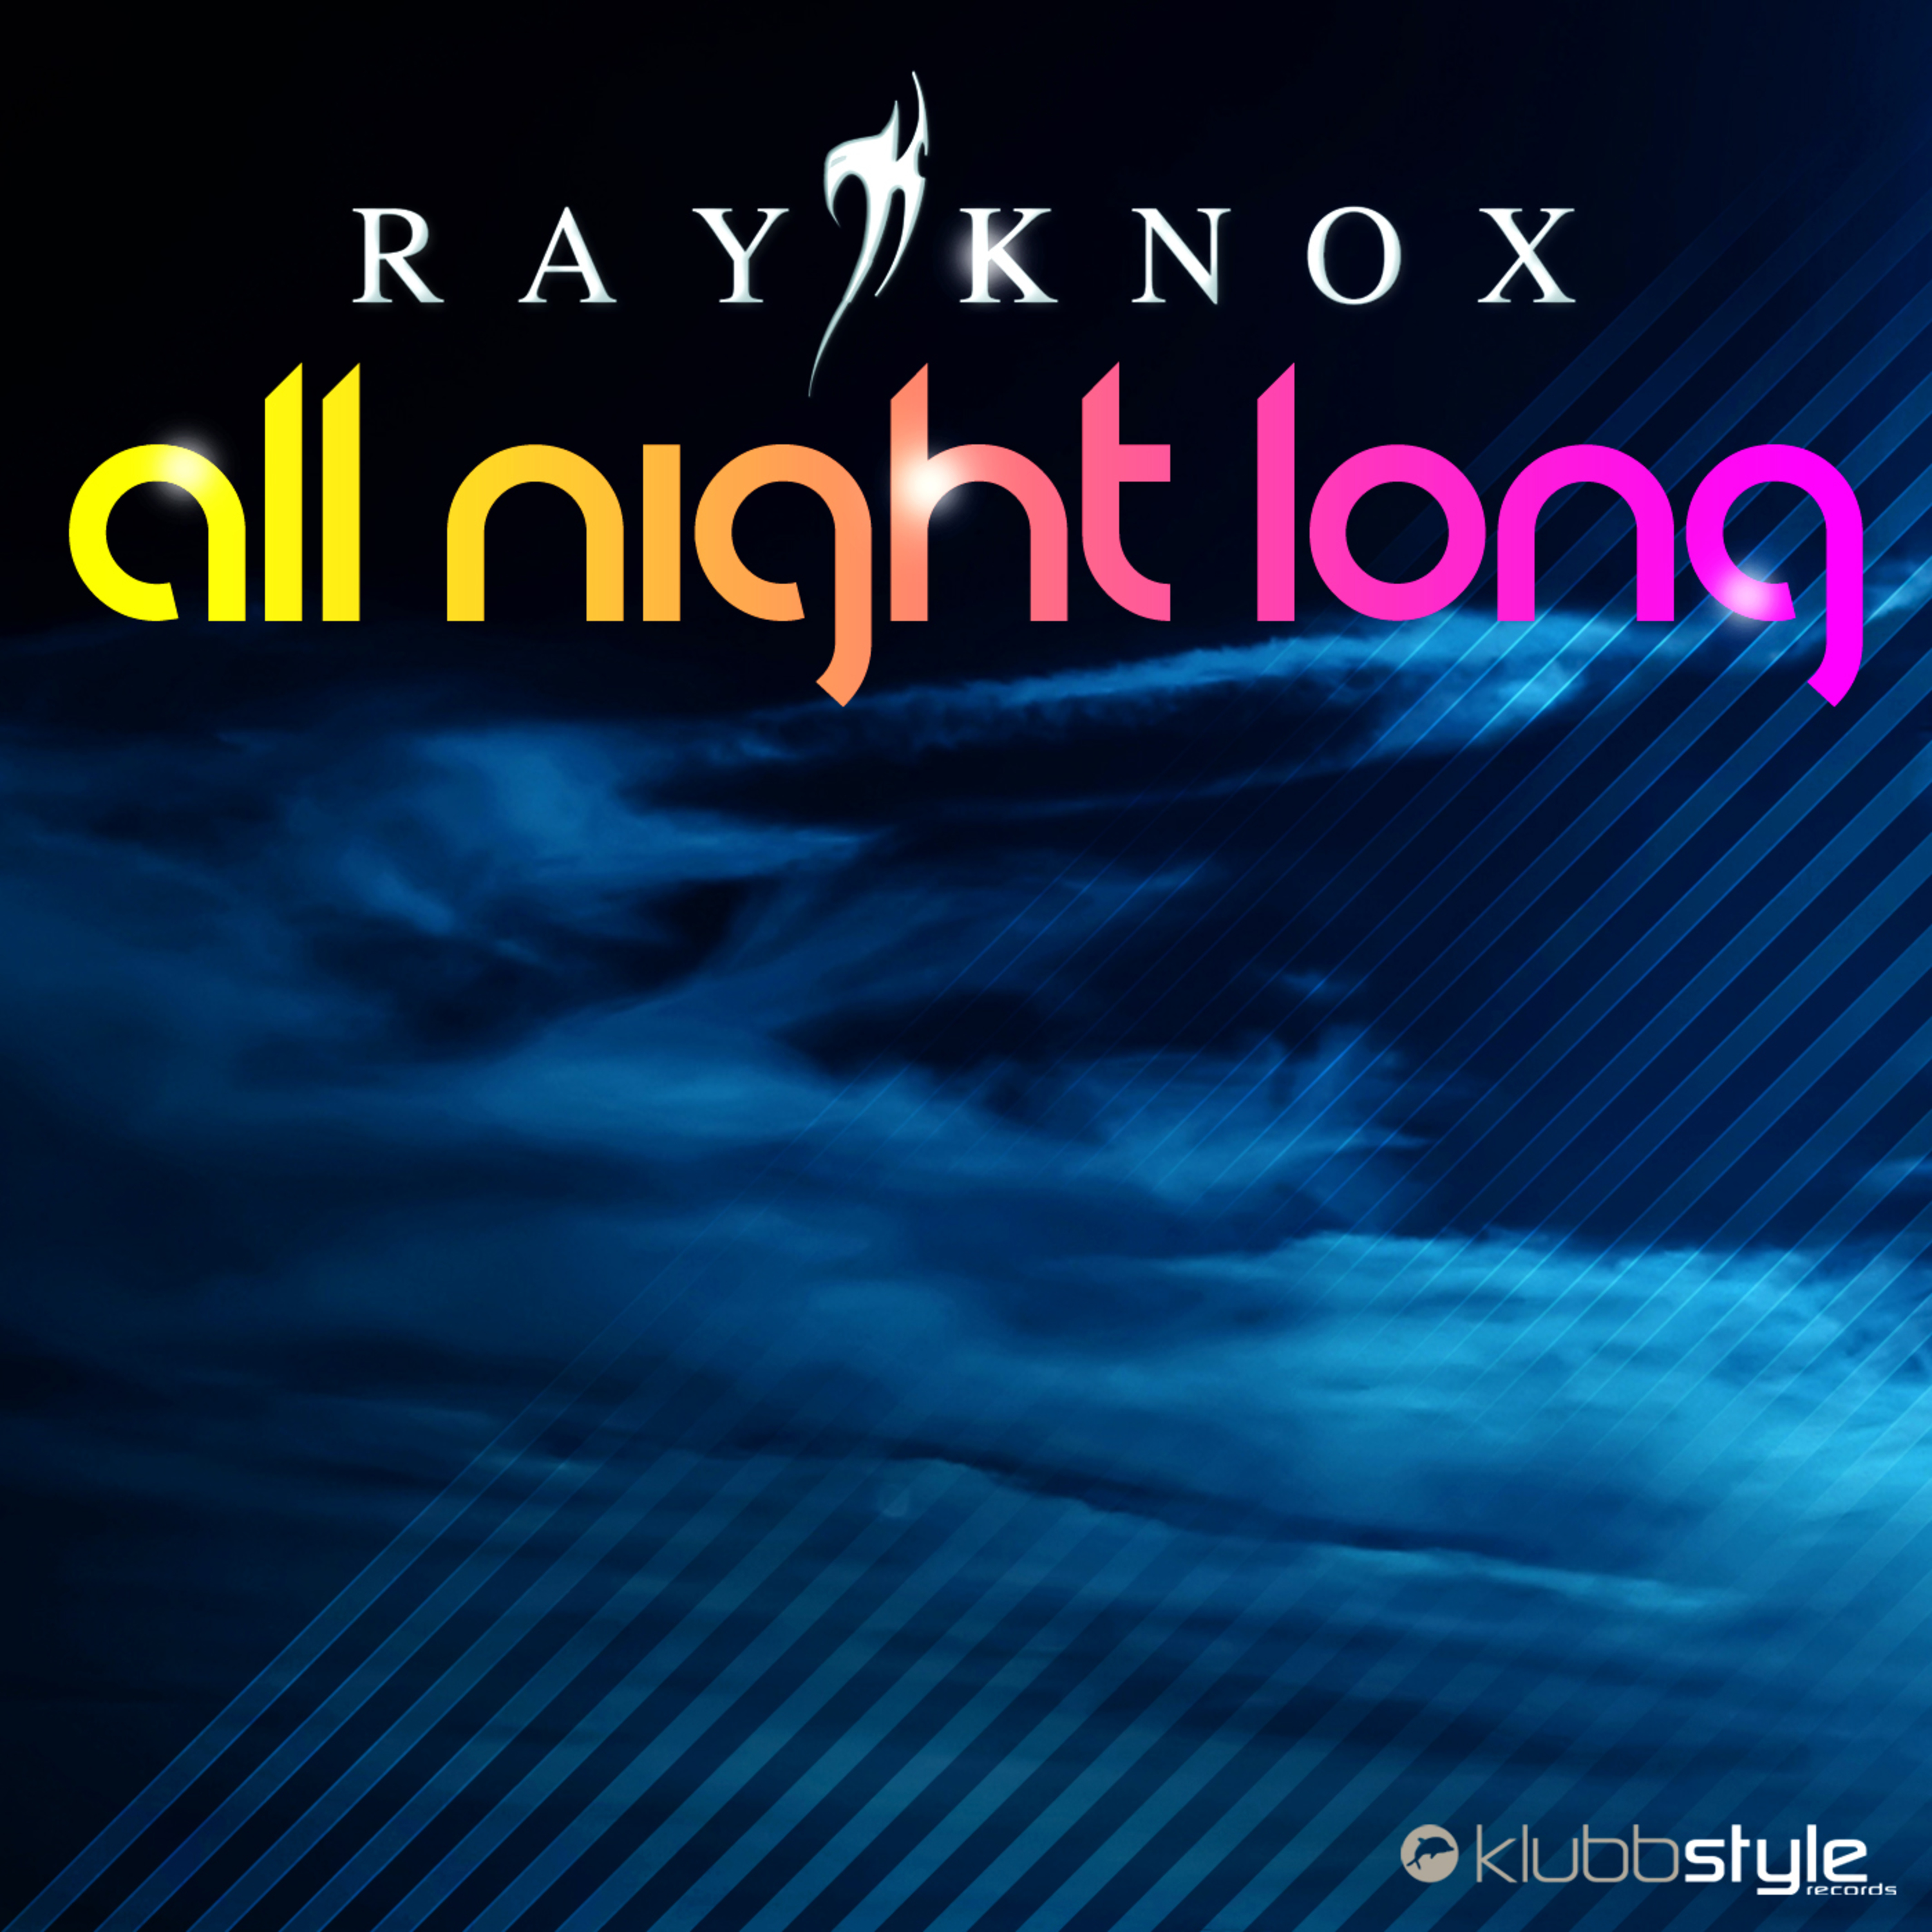 All Night Long (Radio Mix)